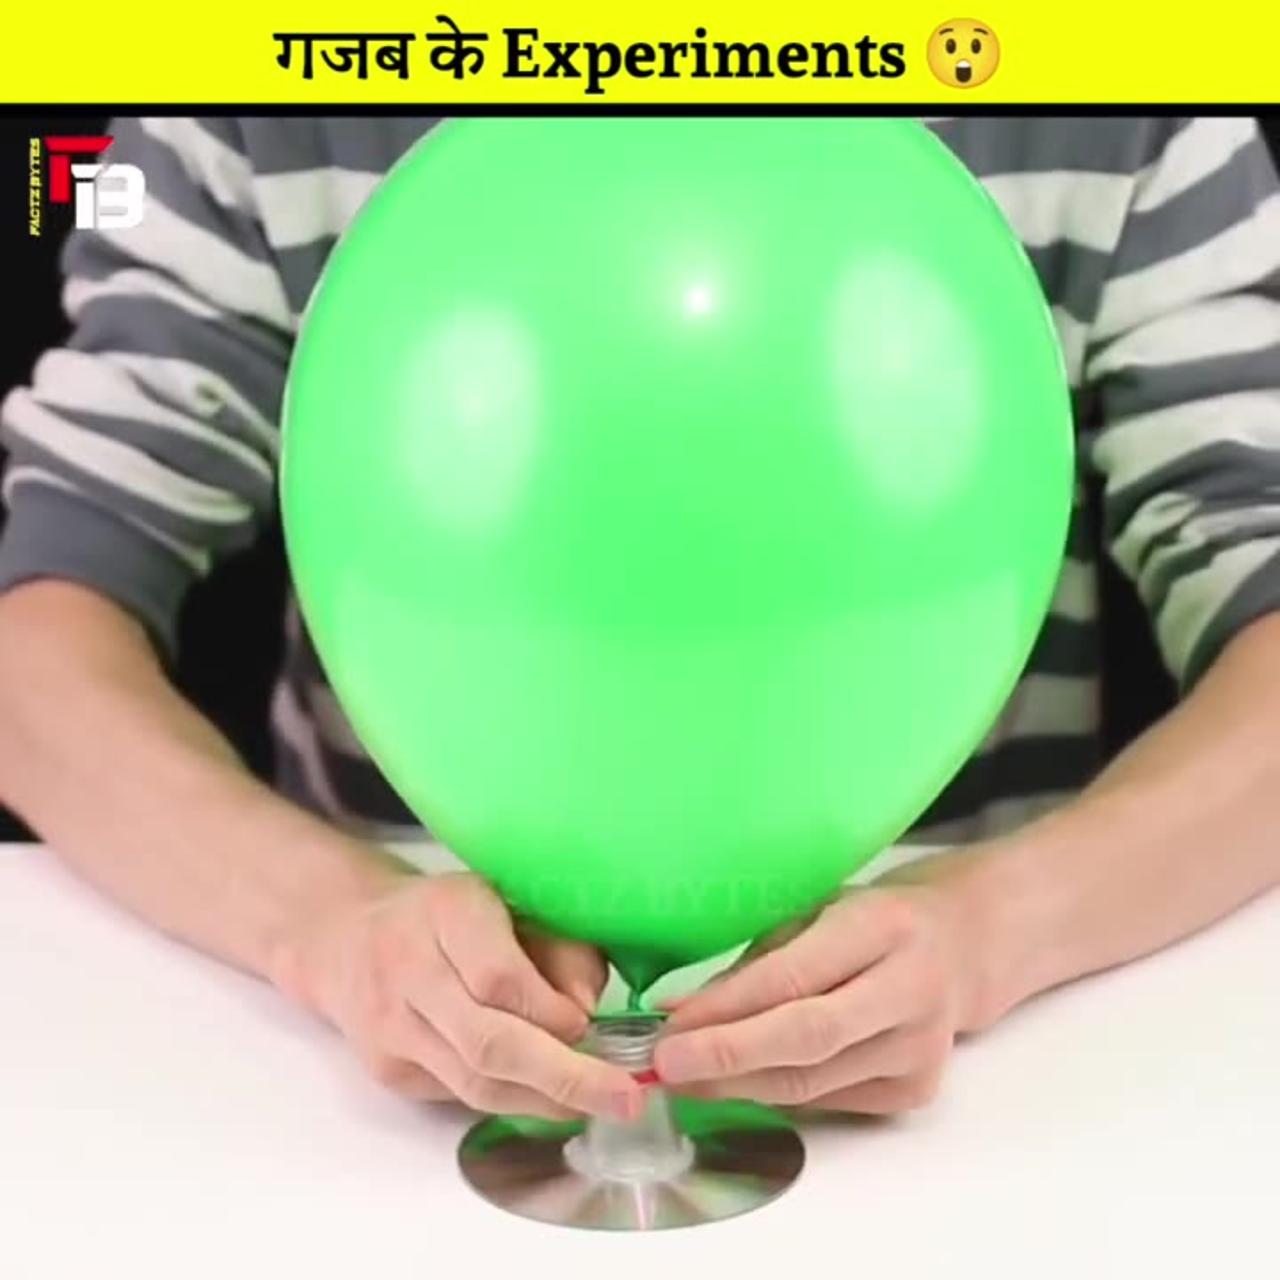 Bomb blast in science experiment 😱